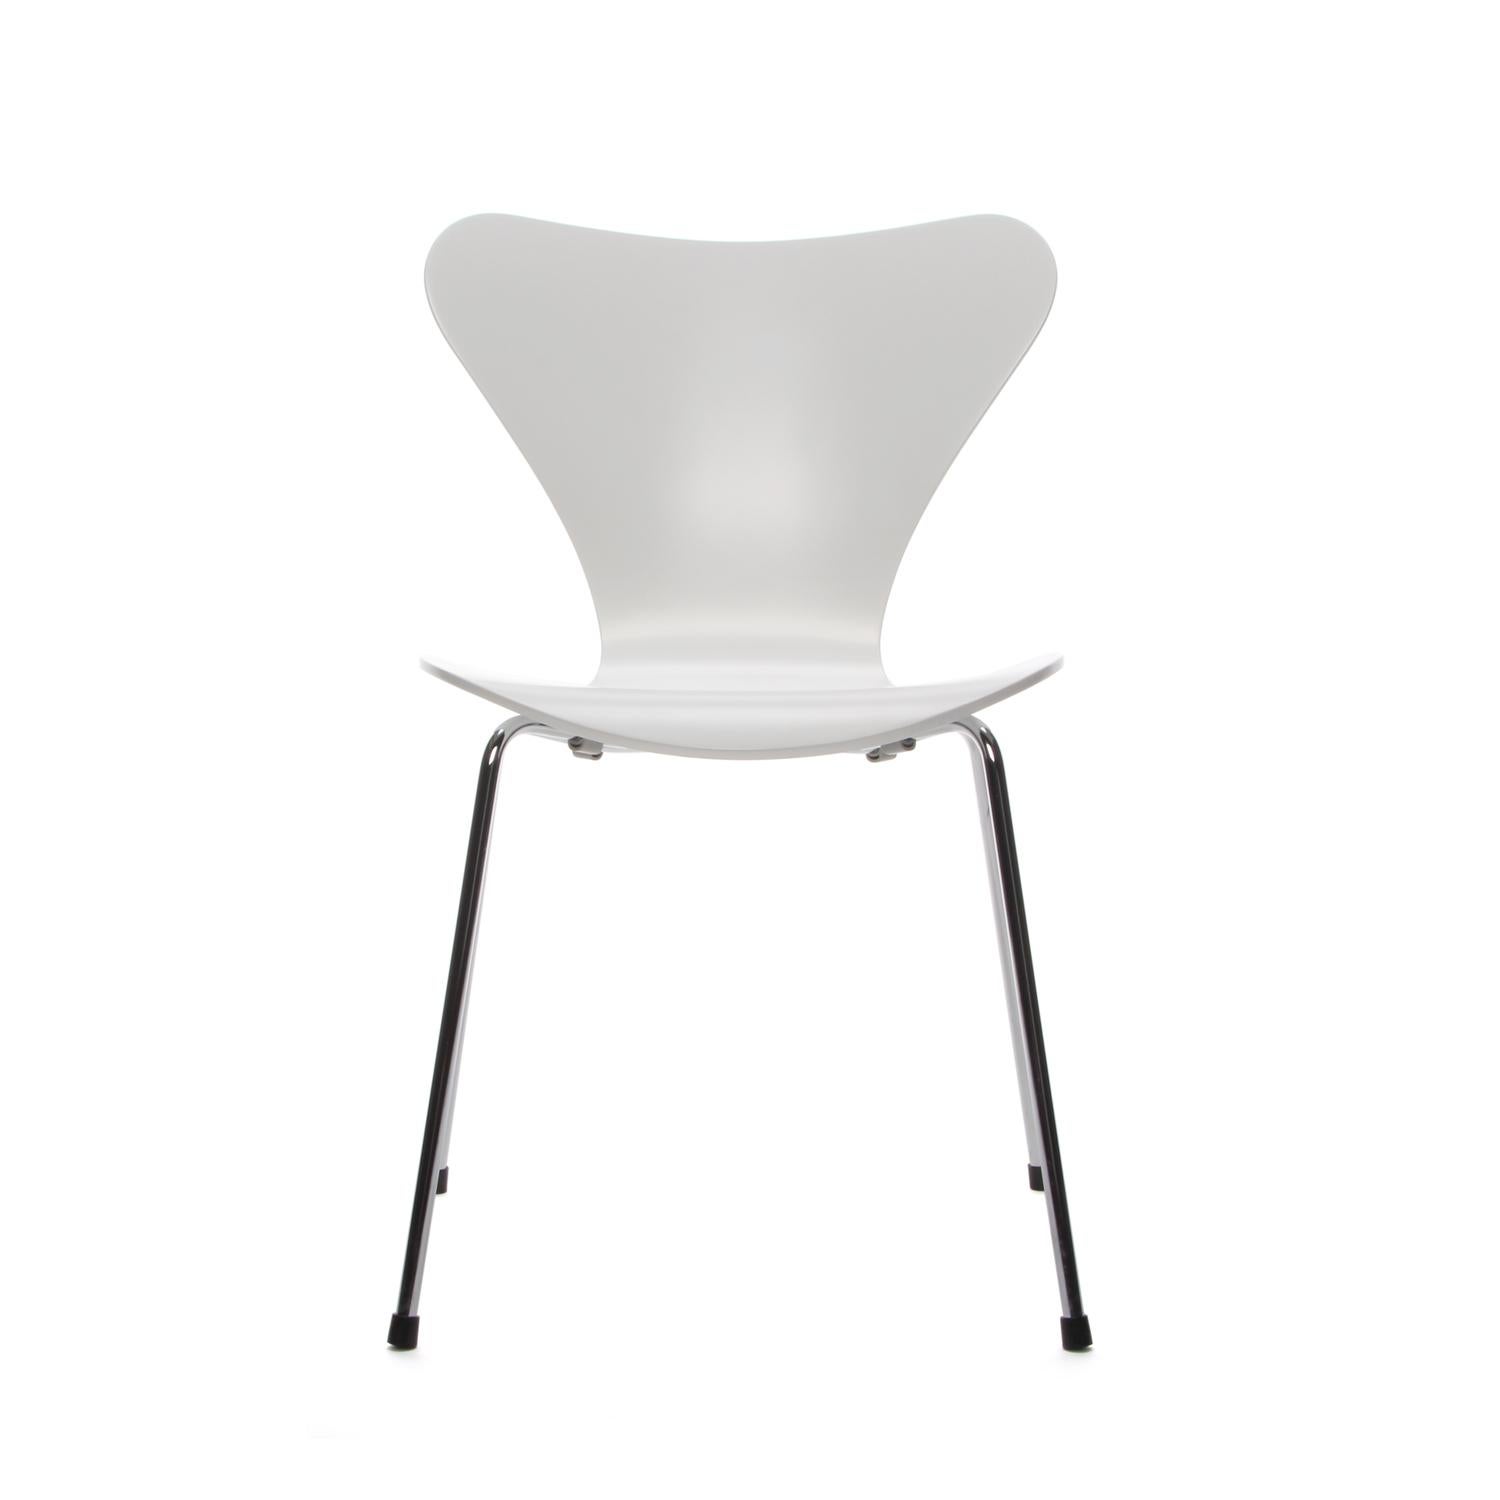 Series 7 White Chair by Arne Jacobsen for Fritz Hansen in 1955